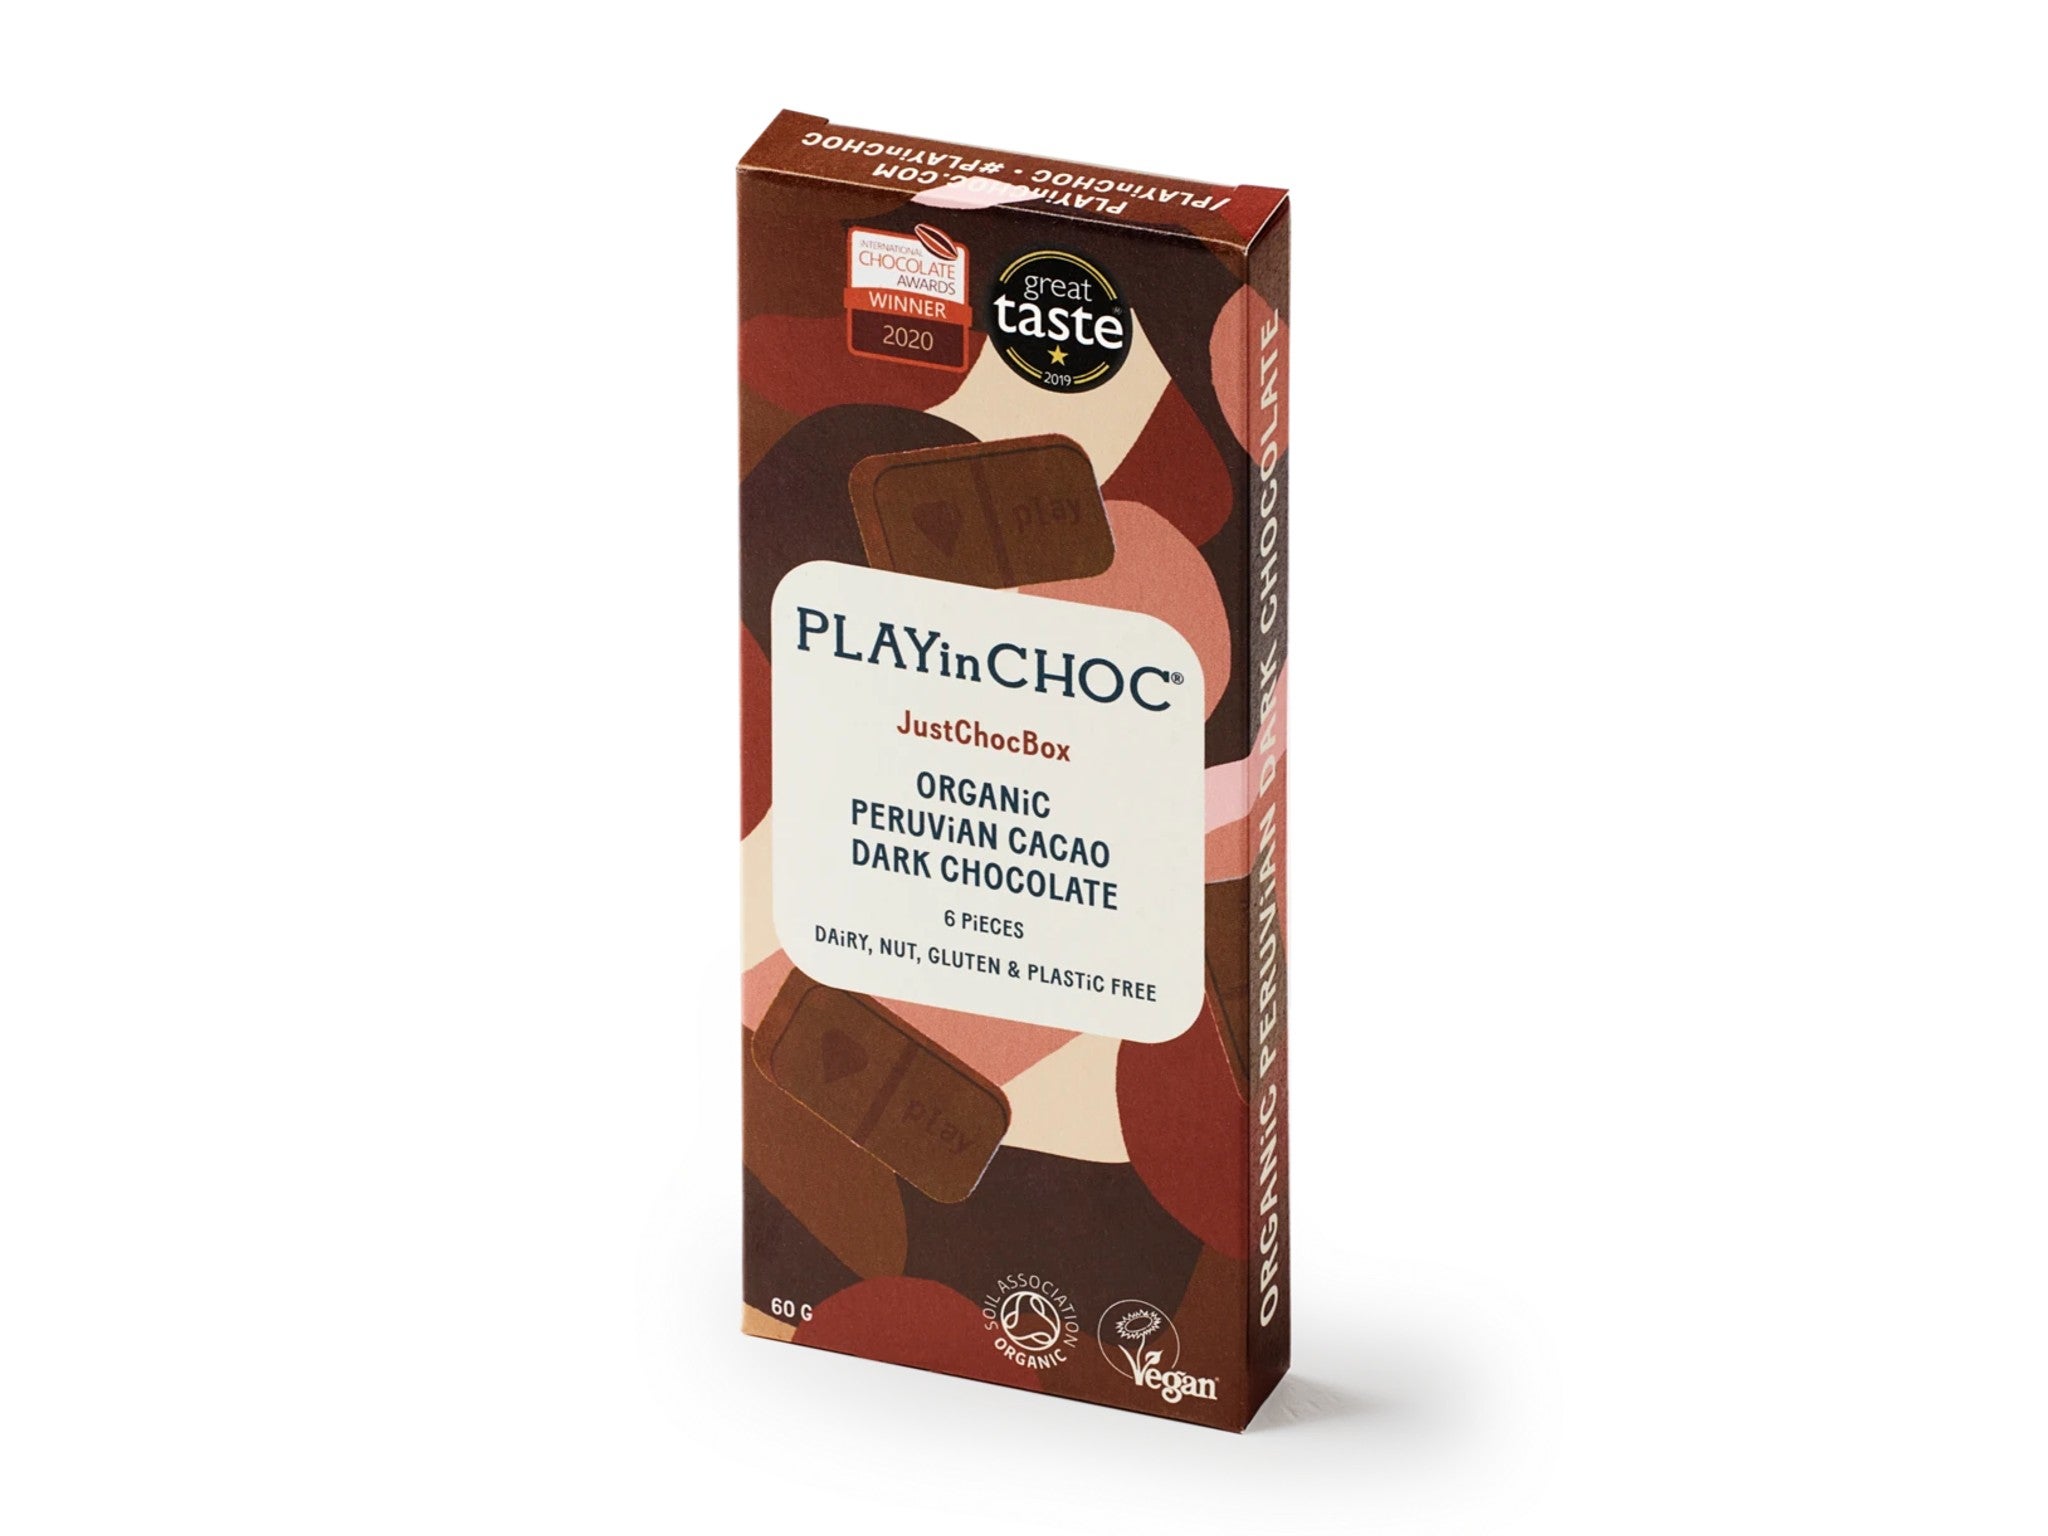 PLAYin ChOC organic Peruvian cacao dark chocolate indybest.jpg